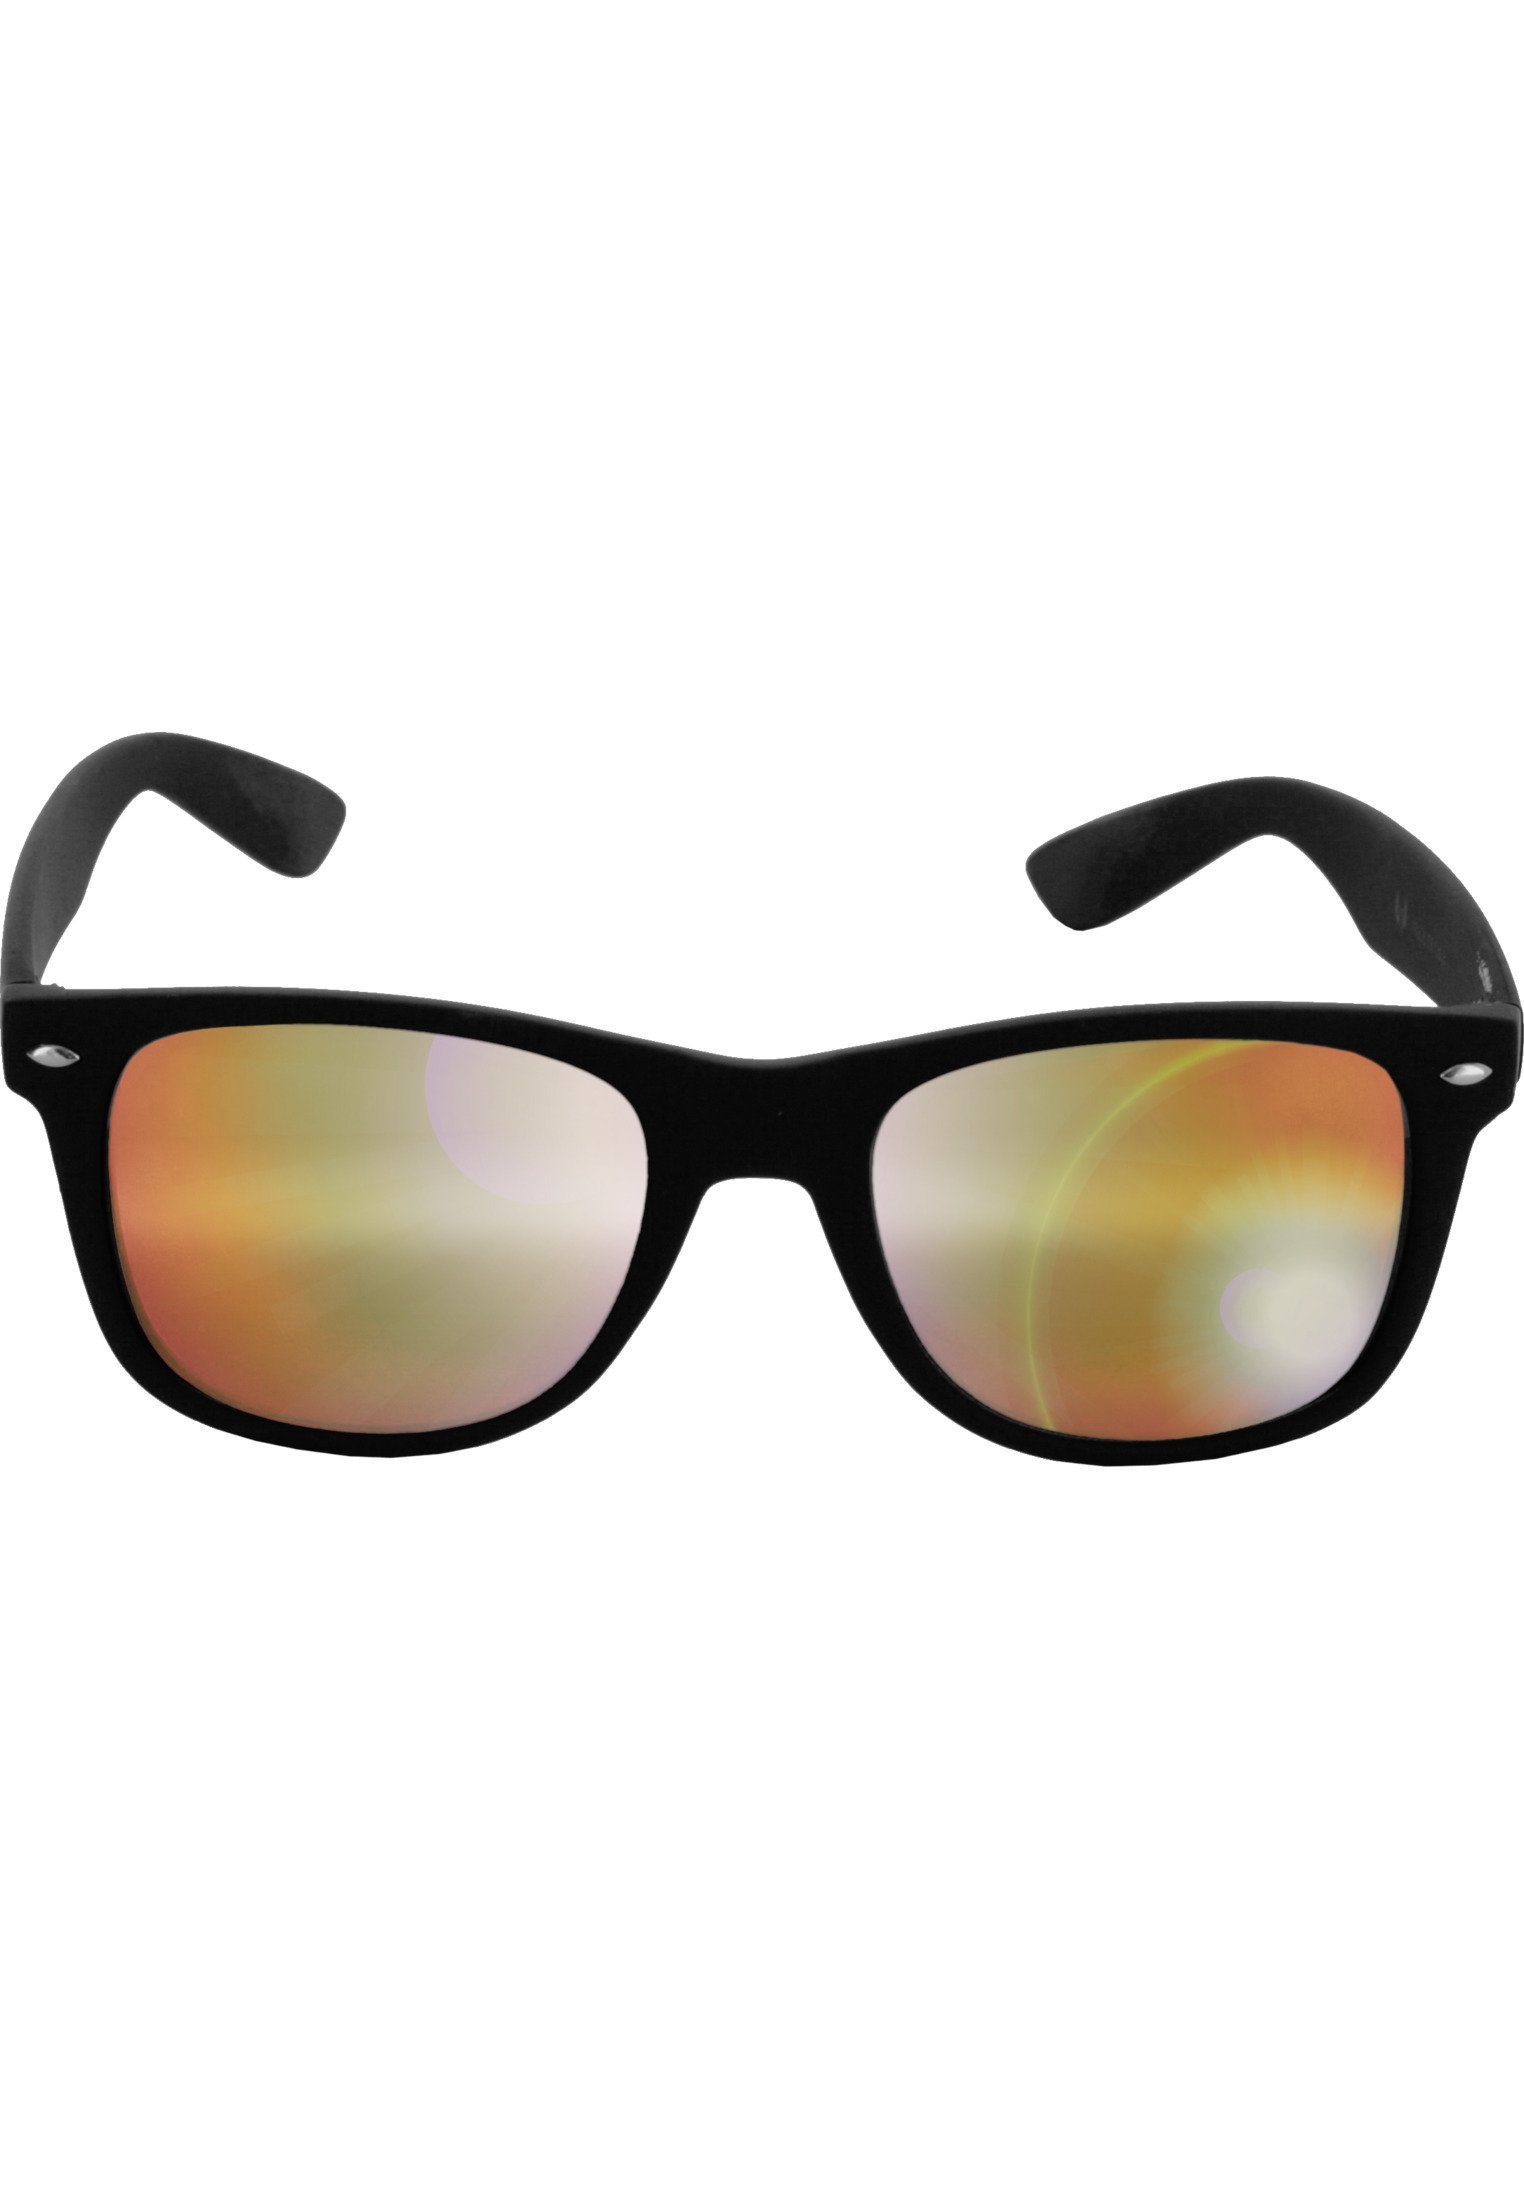 Accessoires Sunglasses MSTRDS Mirror Likoma Sonnenbrille blk/orange